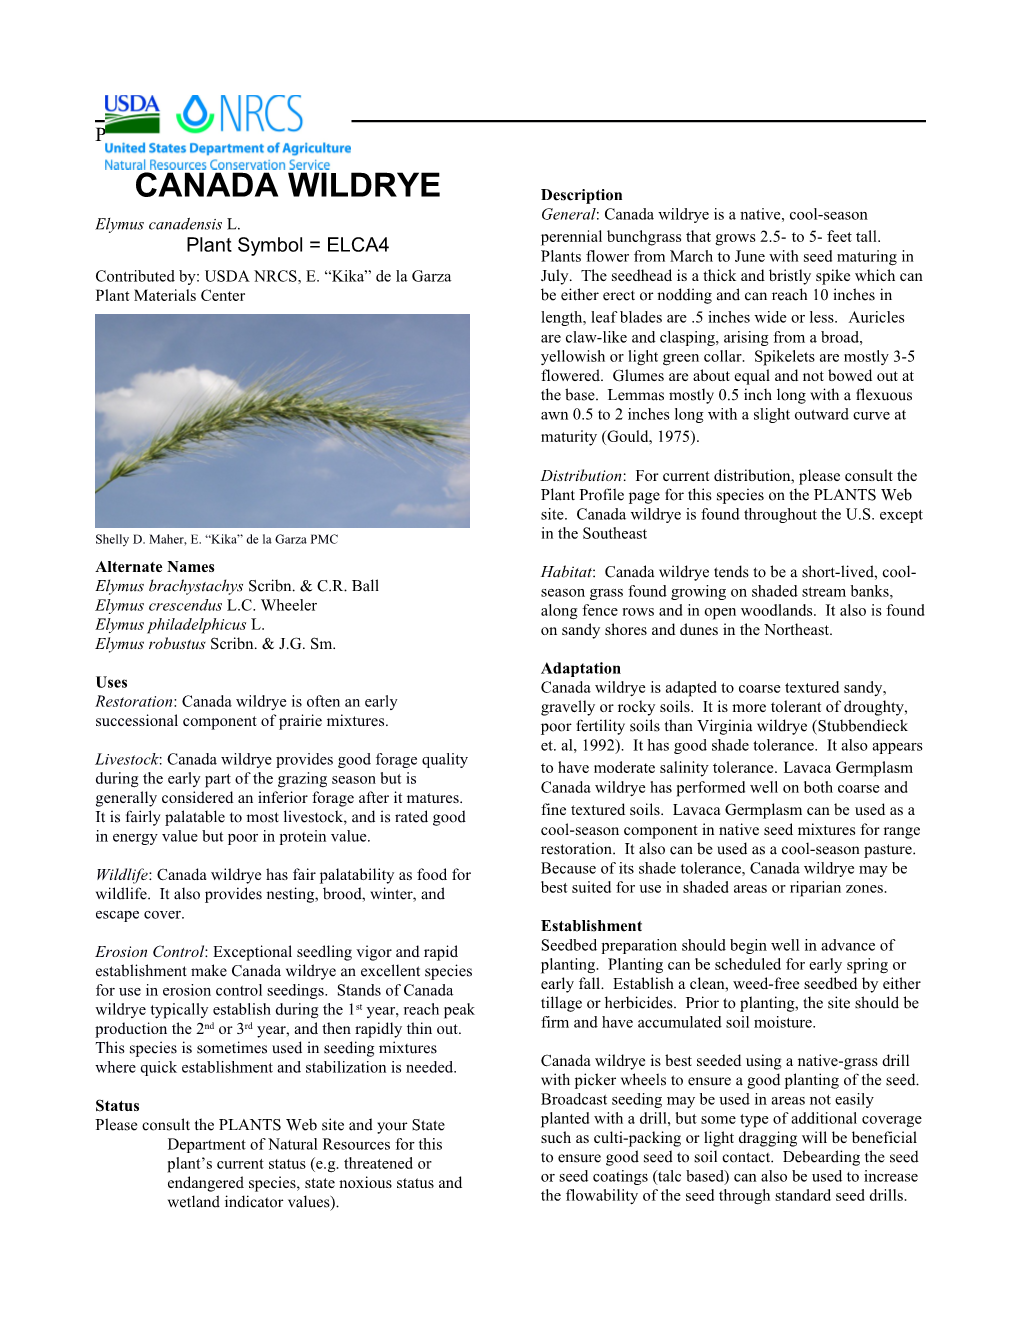 Canada Wildrye Plant Guide